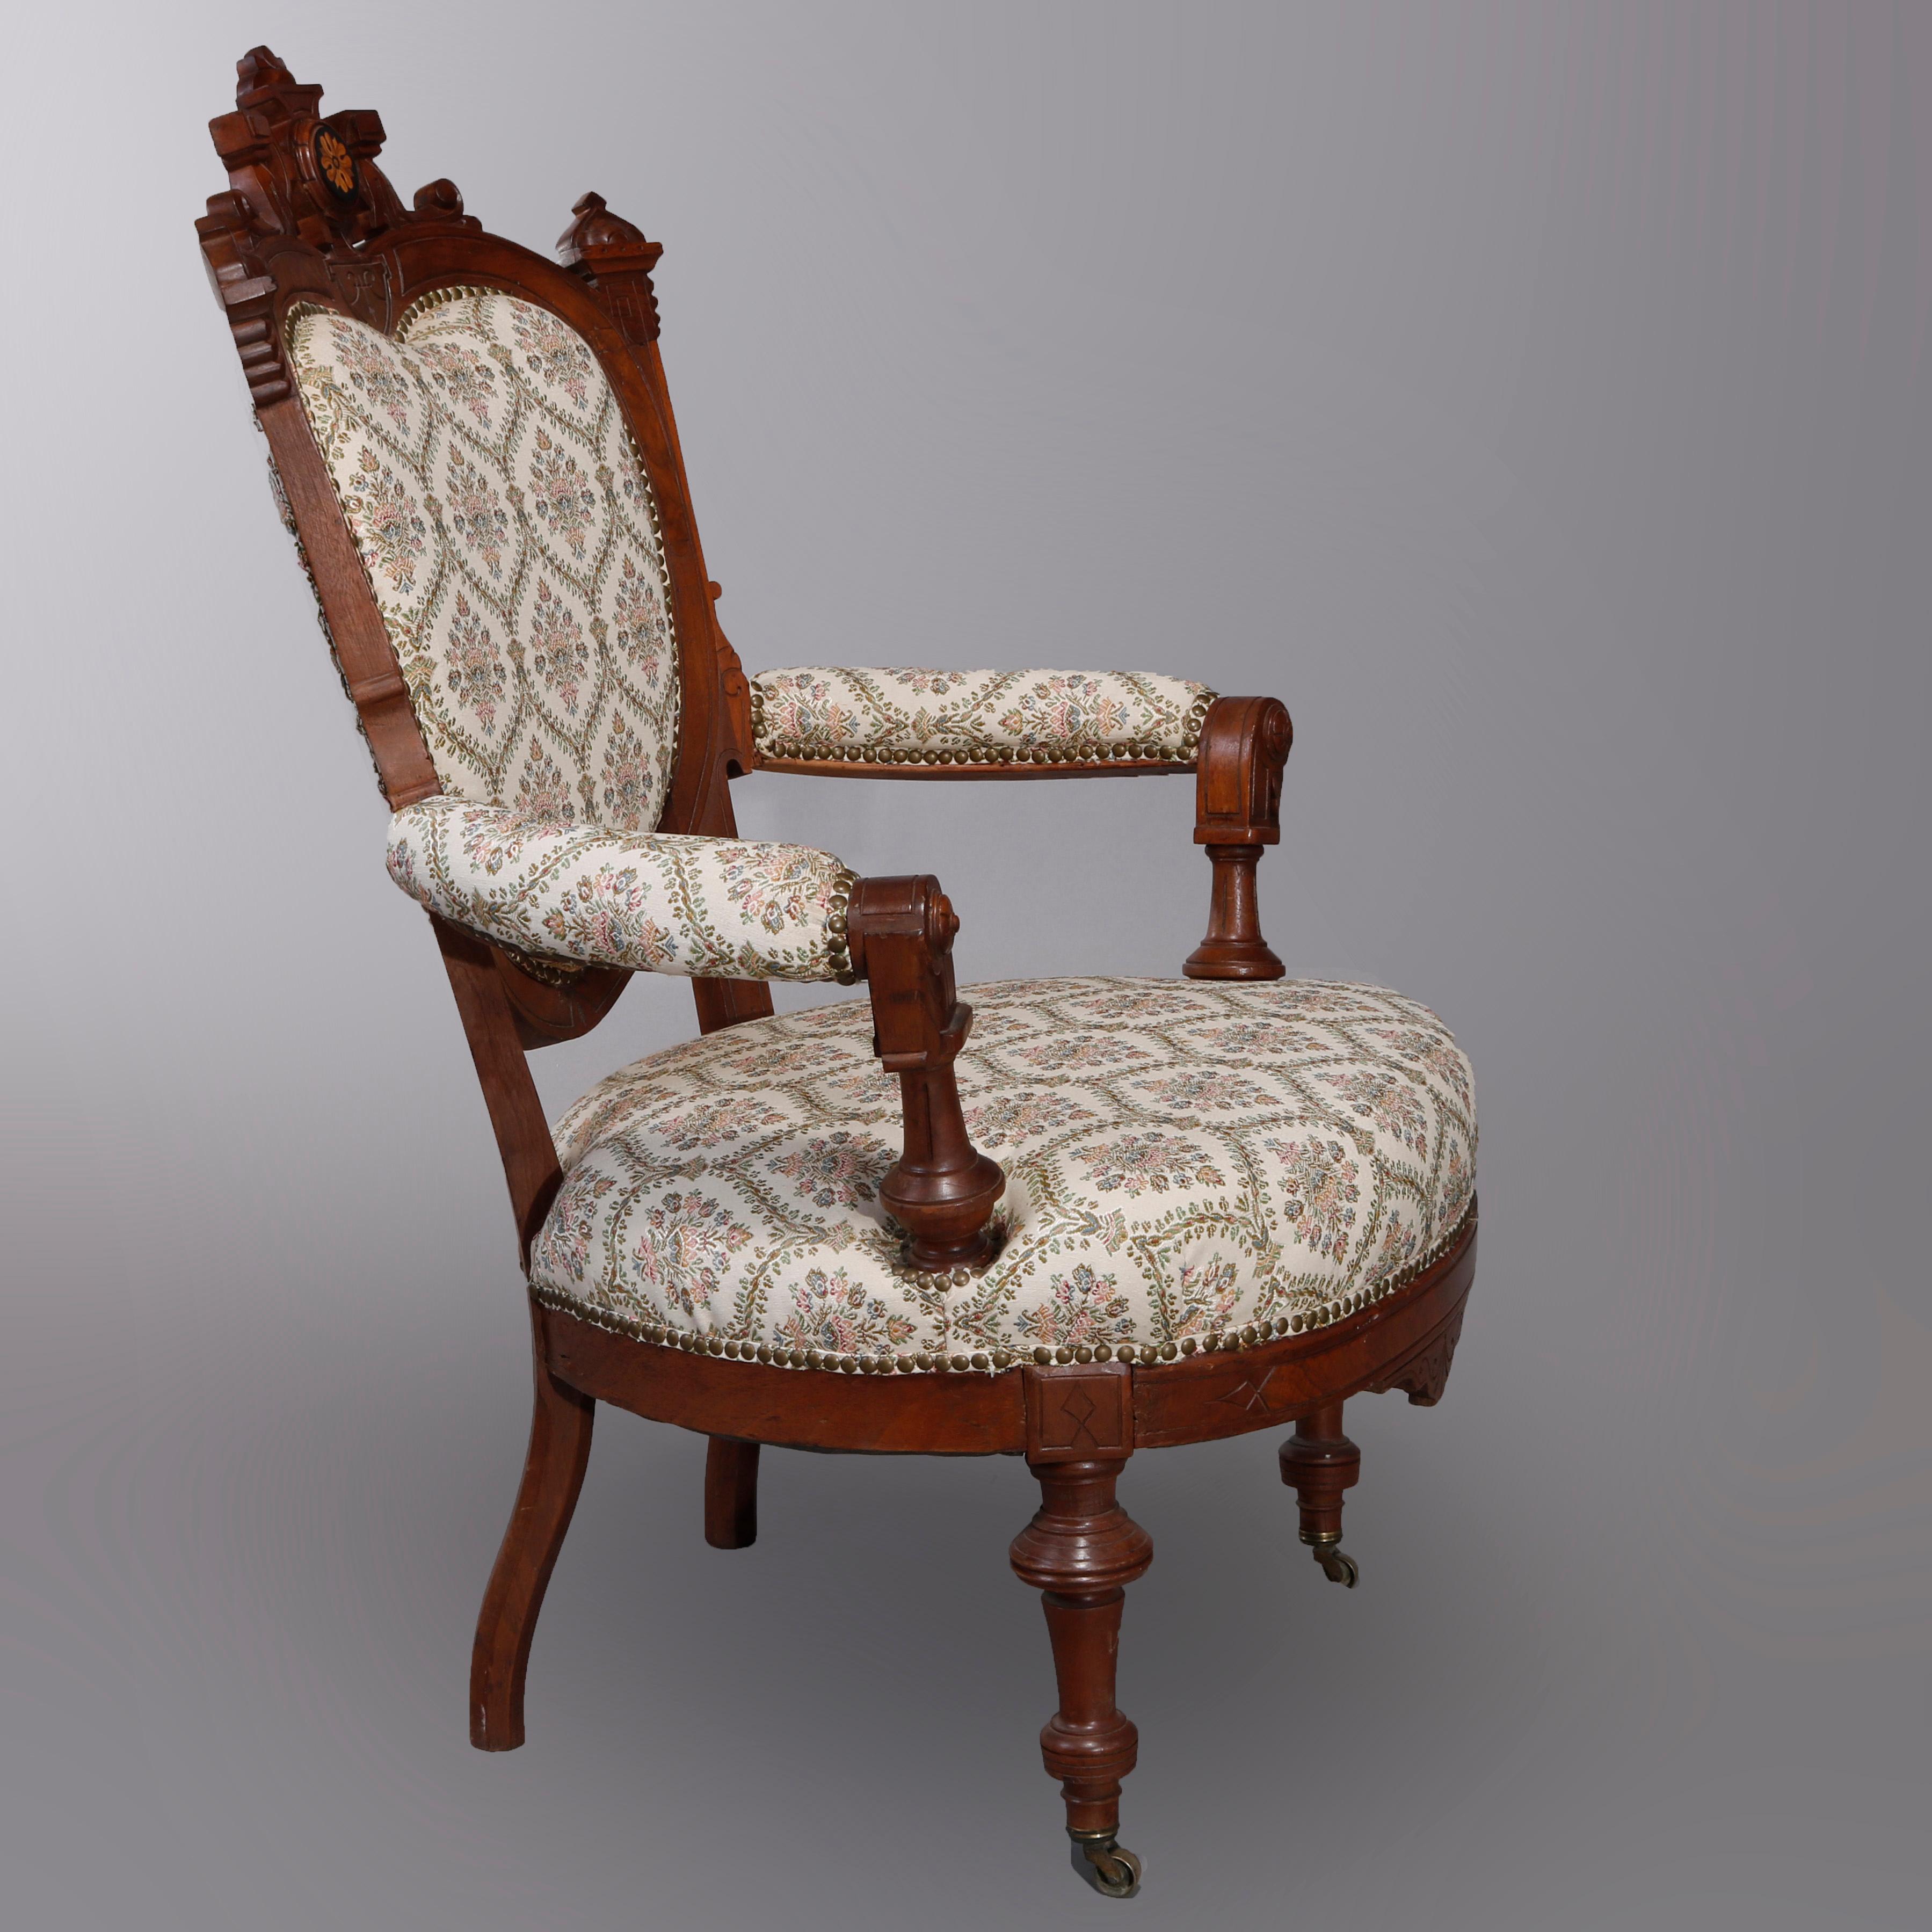 Antique Renaissance Revival Walnut & Burl Parlor Armchairs with Marquetry, c1880 For Sale 2